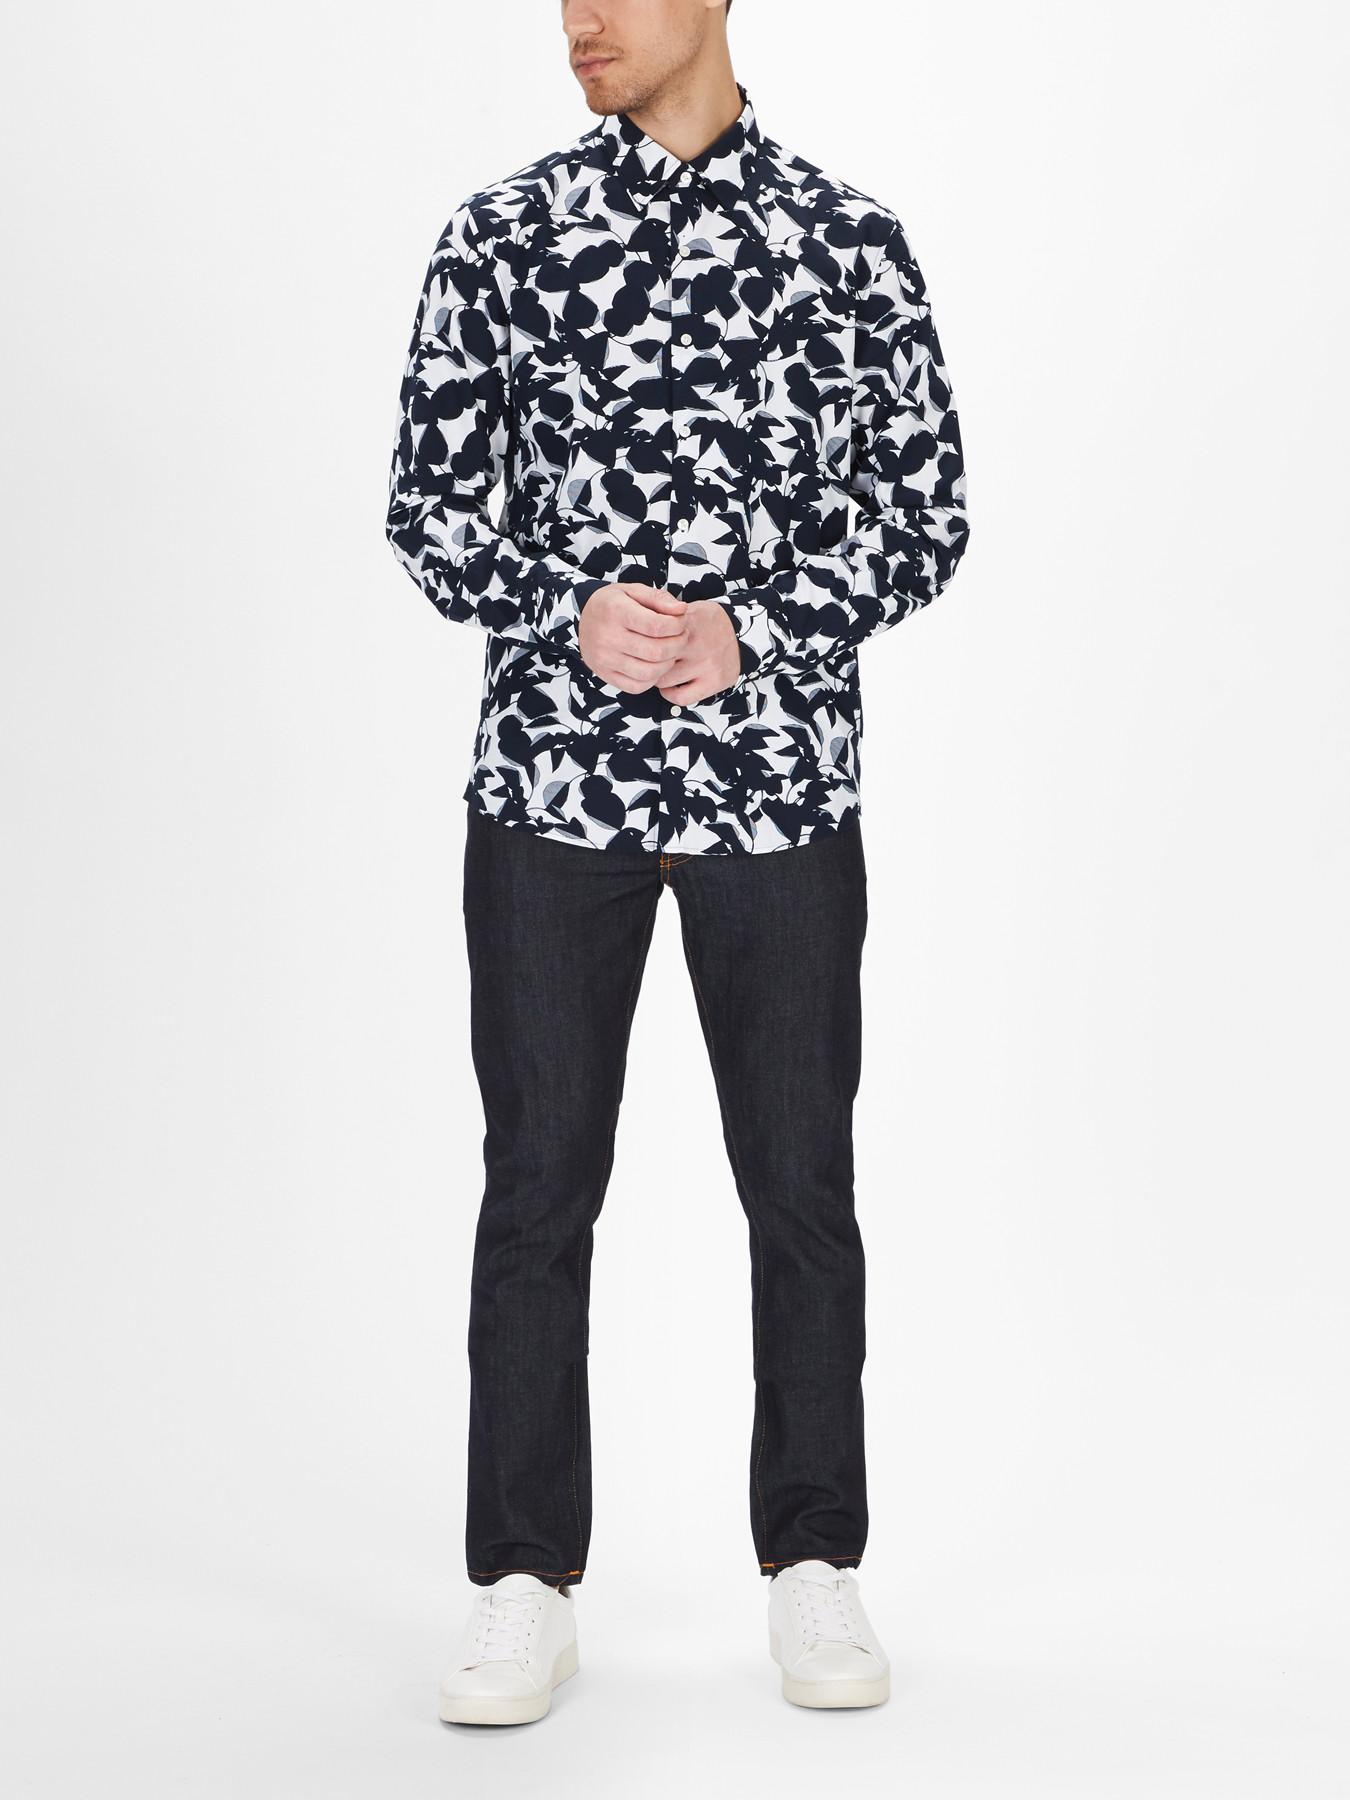 Men's Michael Kors Slim Large Floral Shirt | Fenwick